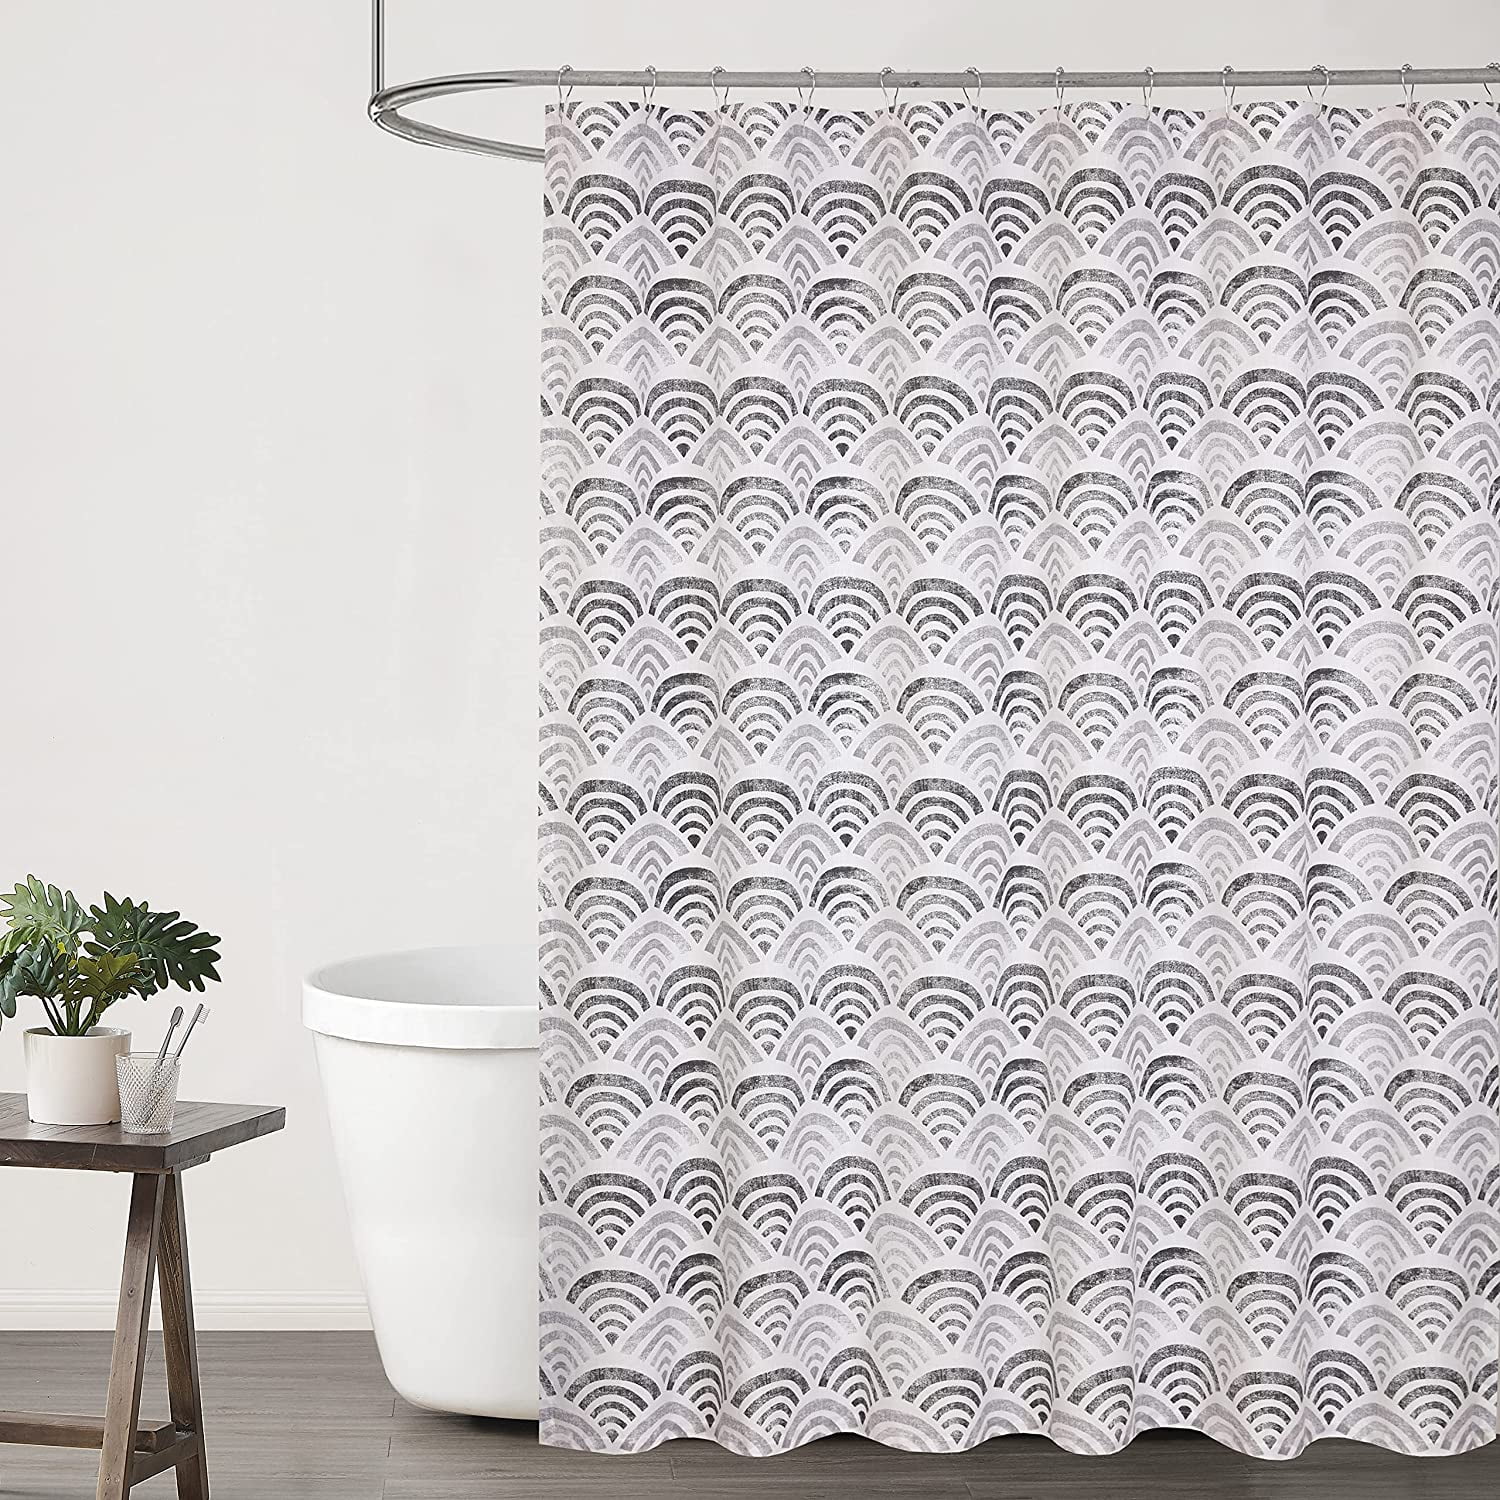 Ruvanti Shower Curtains 72x72 inch Cotton Blend, Bathroom Shower Curtain  Scallop Grey Design. Fabric Shower Curtain Set Is Soft, Washable,  Decorative With 12 Curtain Hooks 